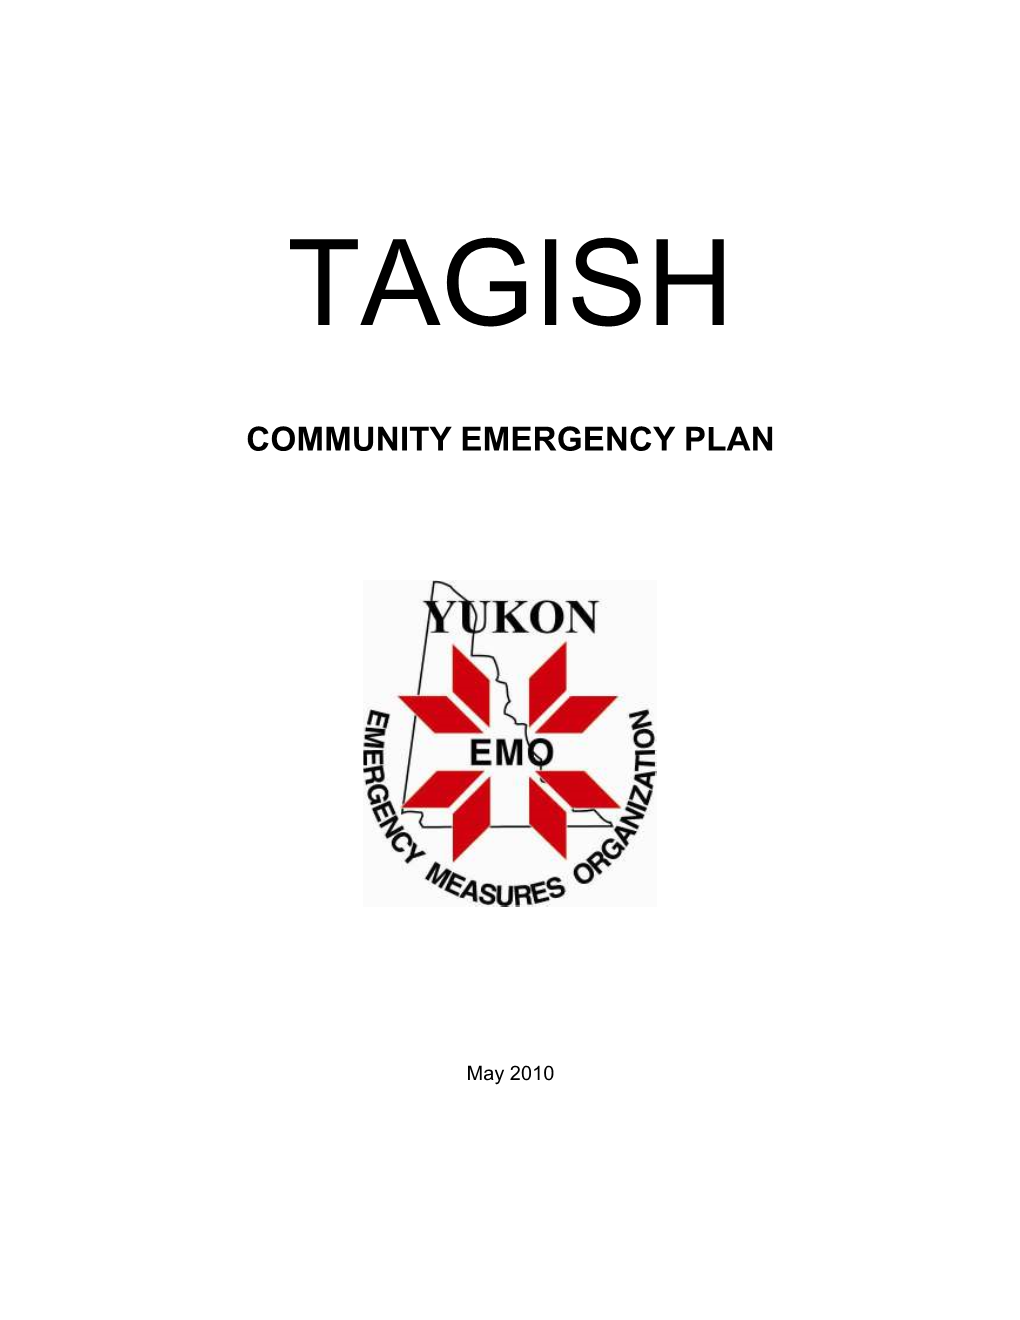 Community Emergency Plan